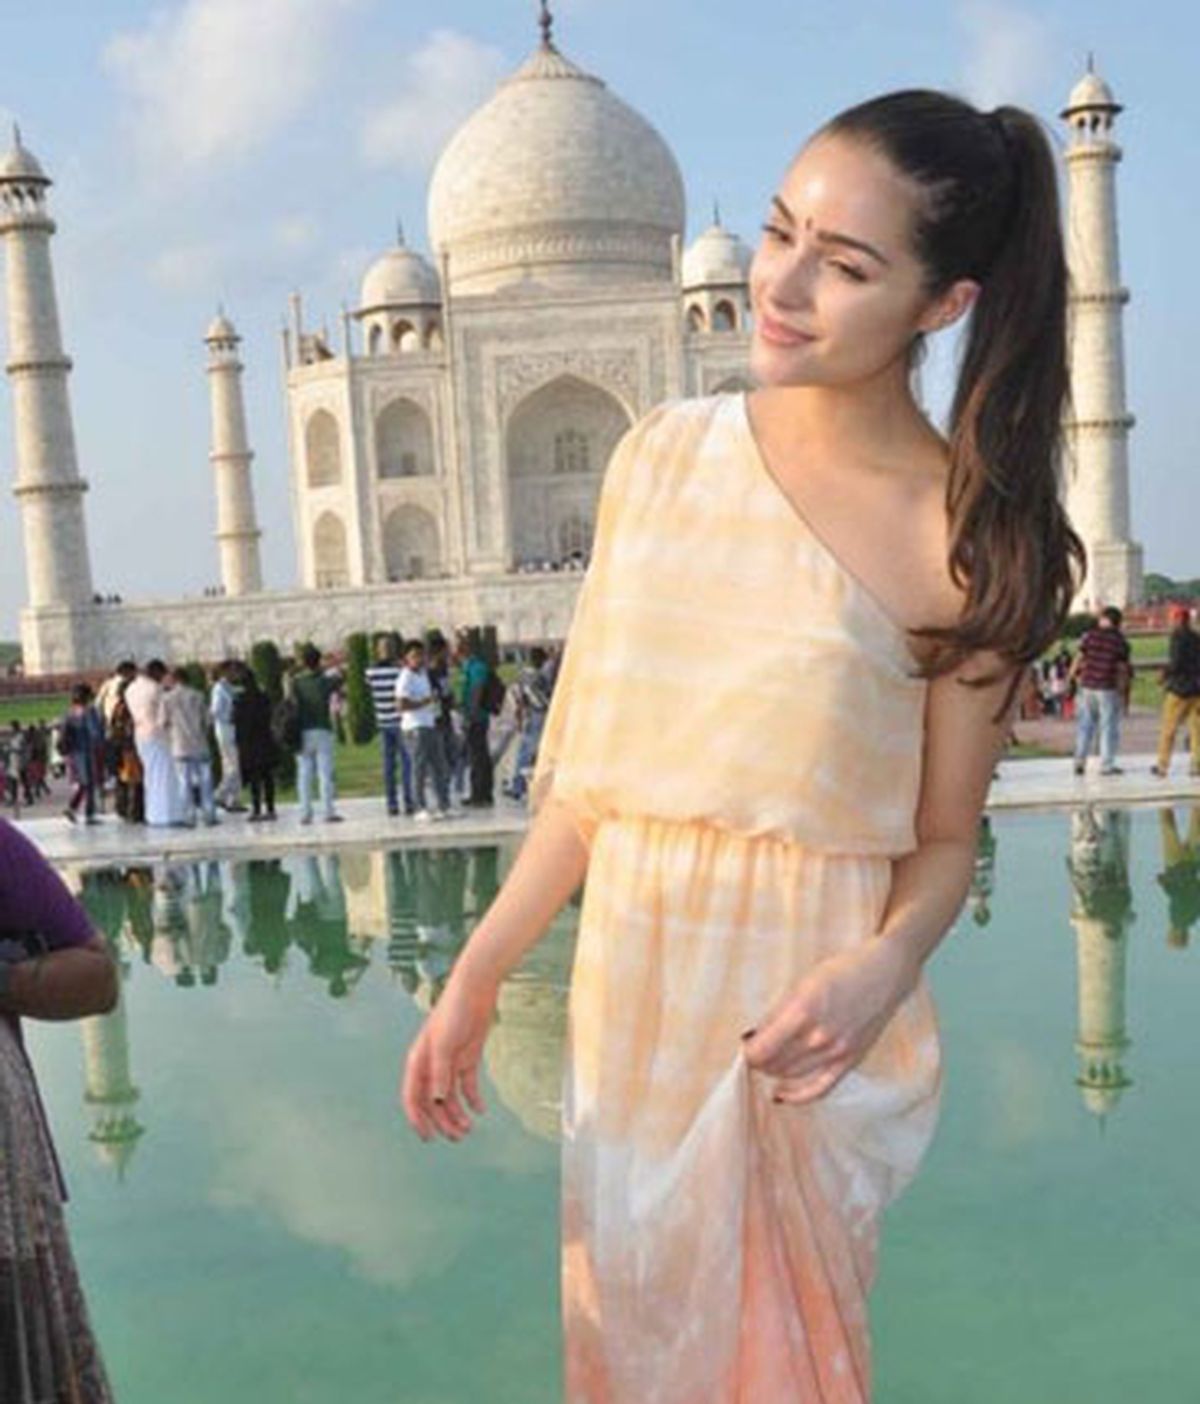 Polémica por las fotos de Miss Universo en el Taj Mahal